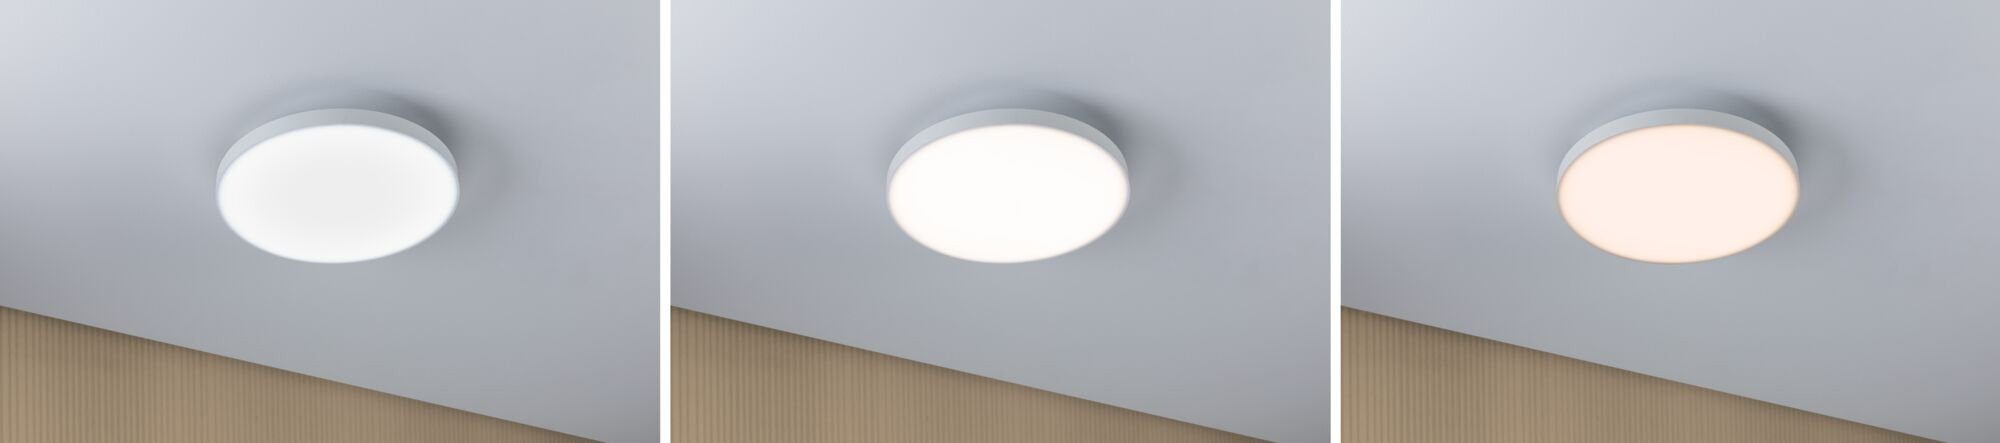 fest Tageslichtweiß LED integriert, Panel LED Velora, Paulmann